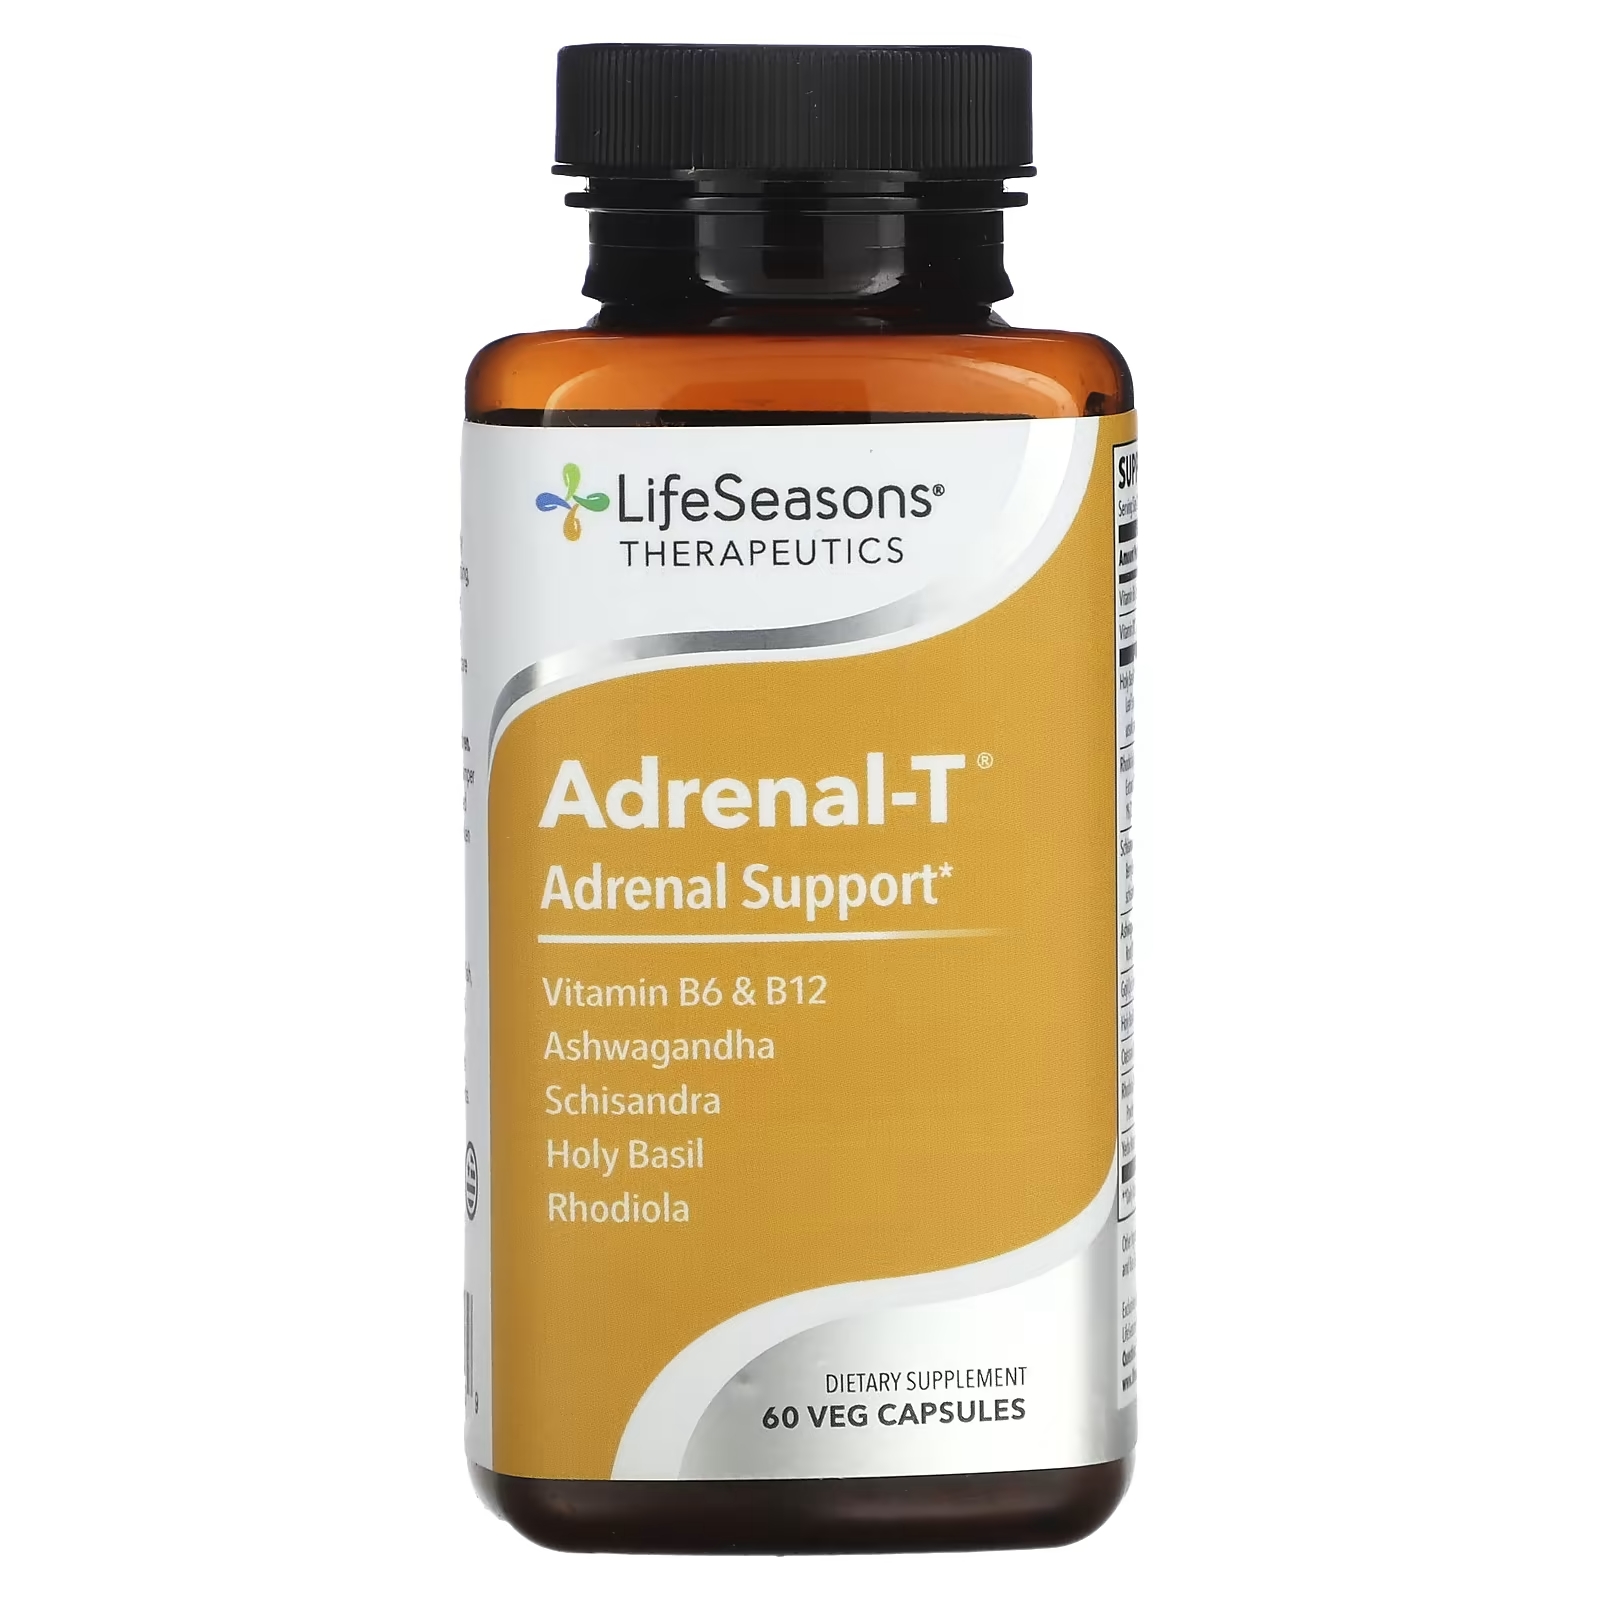 LifeSeasons Adrenal-T адреналиновая поддержка, 60 вегетарианских капсул lifeseasons clari t когнитивная поддержка 60 растительных капсул